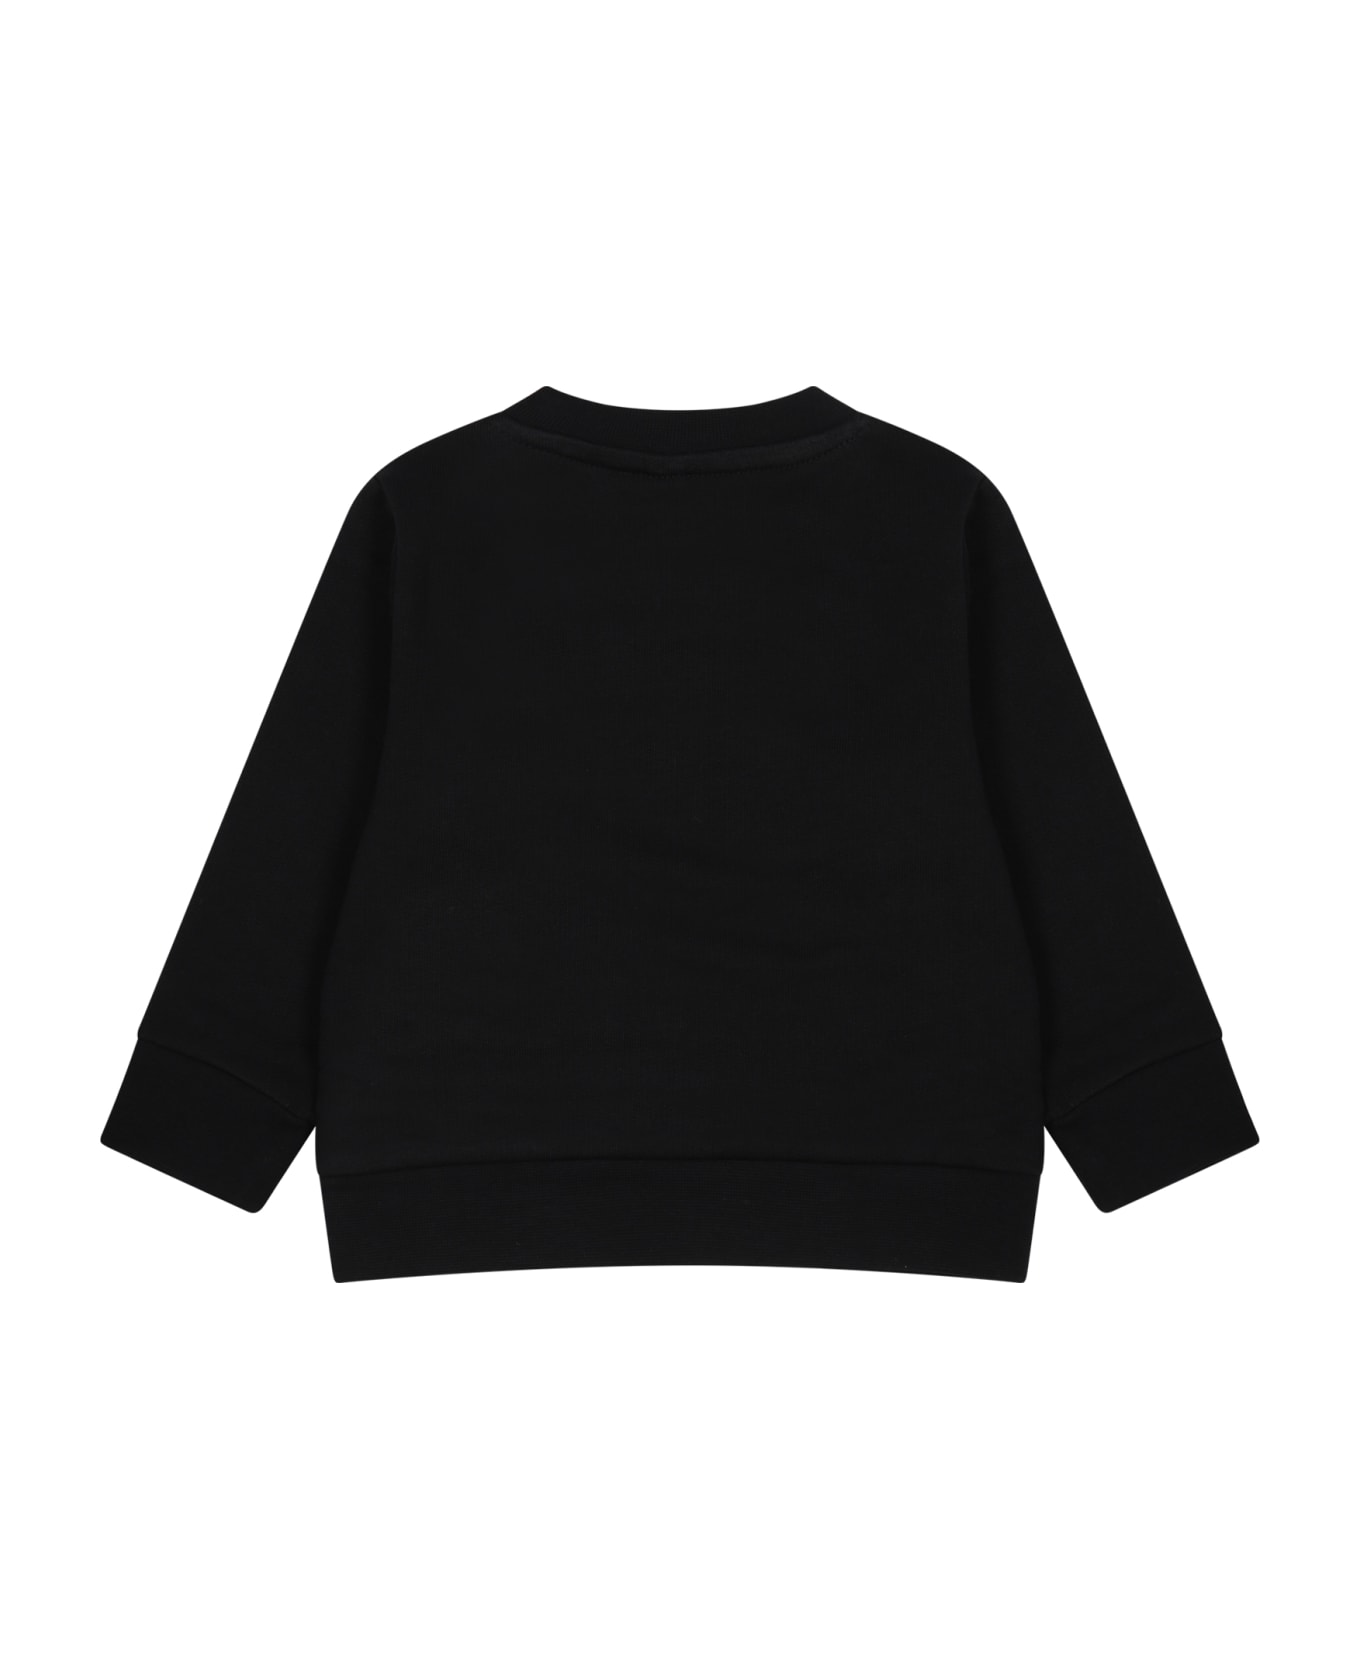 Stella McCartney Kids Black Sweatshirt For Baby Boy With Print - Black